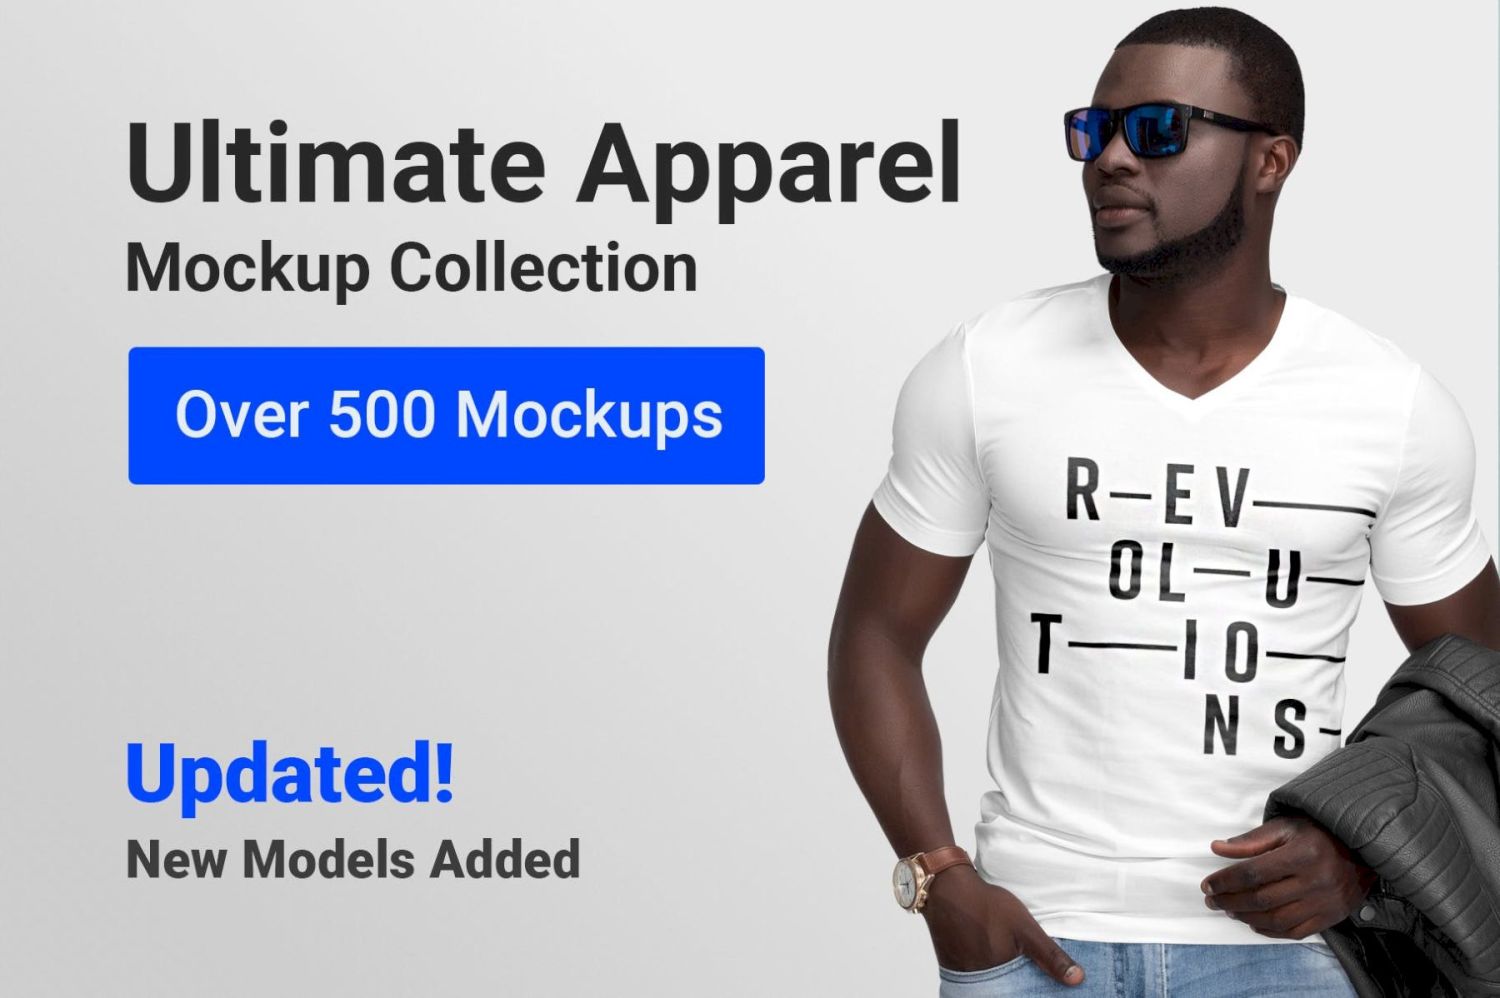 终极服装样机系列 Ultimate Apparel Mockup Collection插图